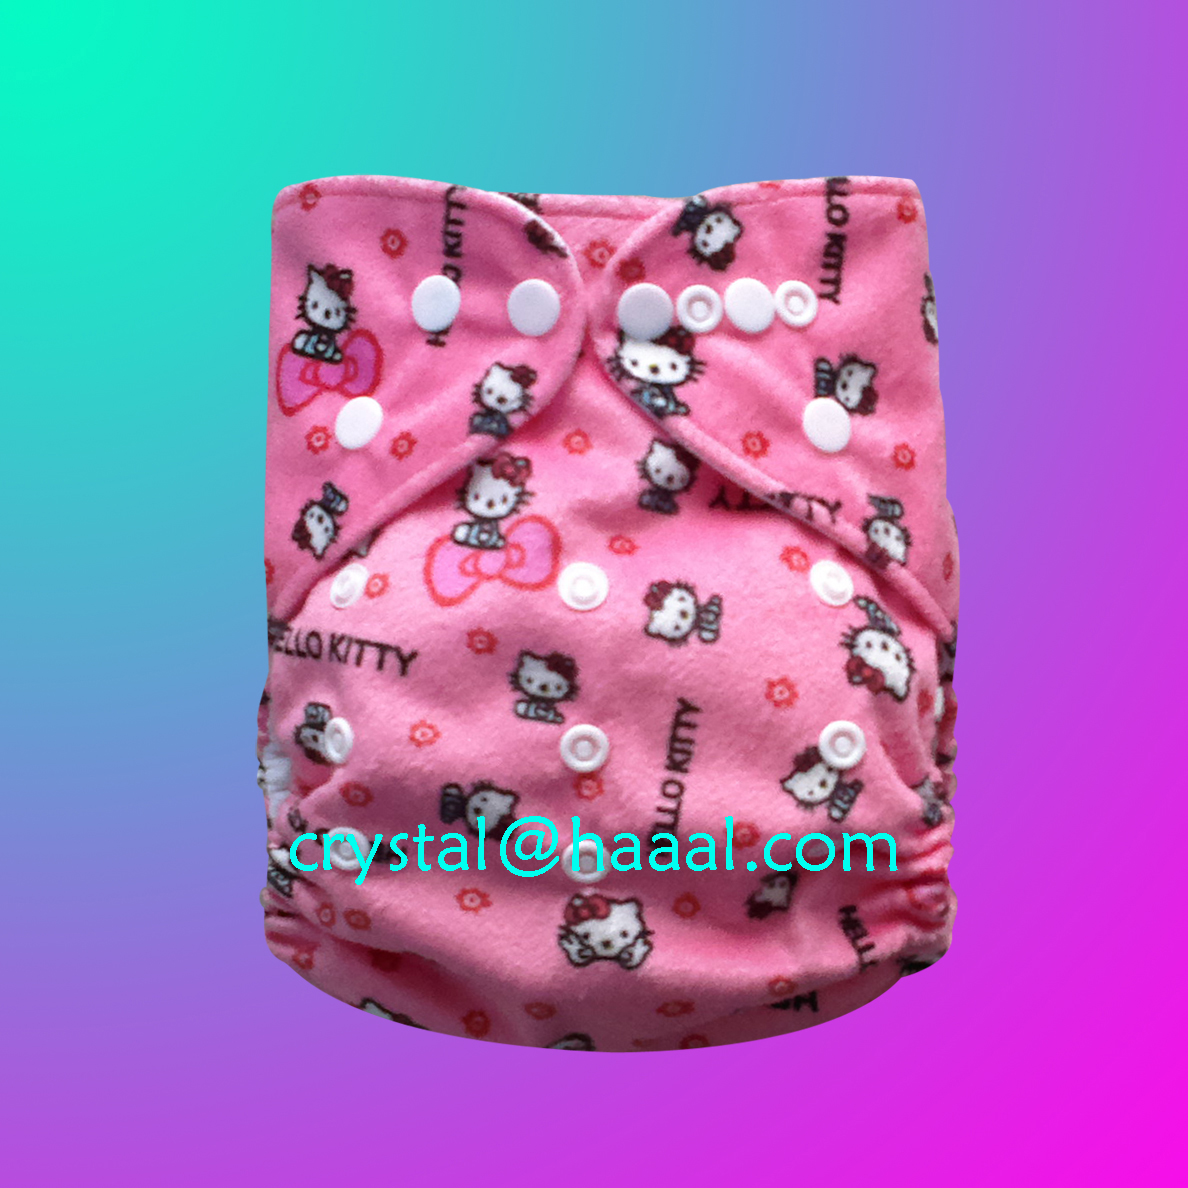 Beautiful Minky pocket diaper